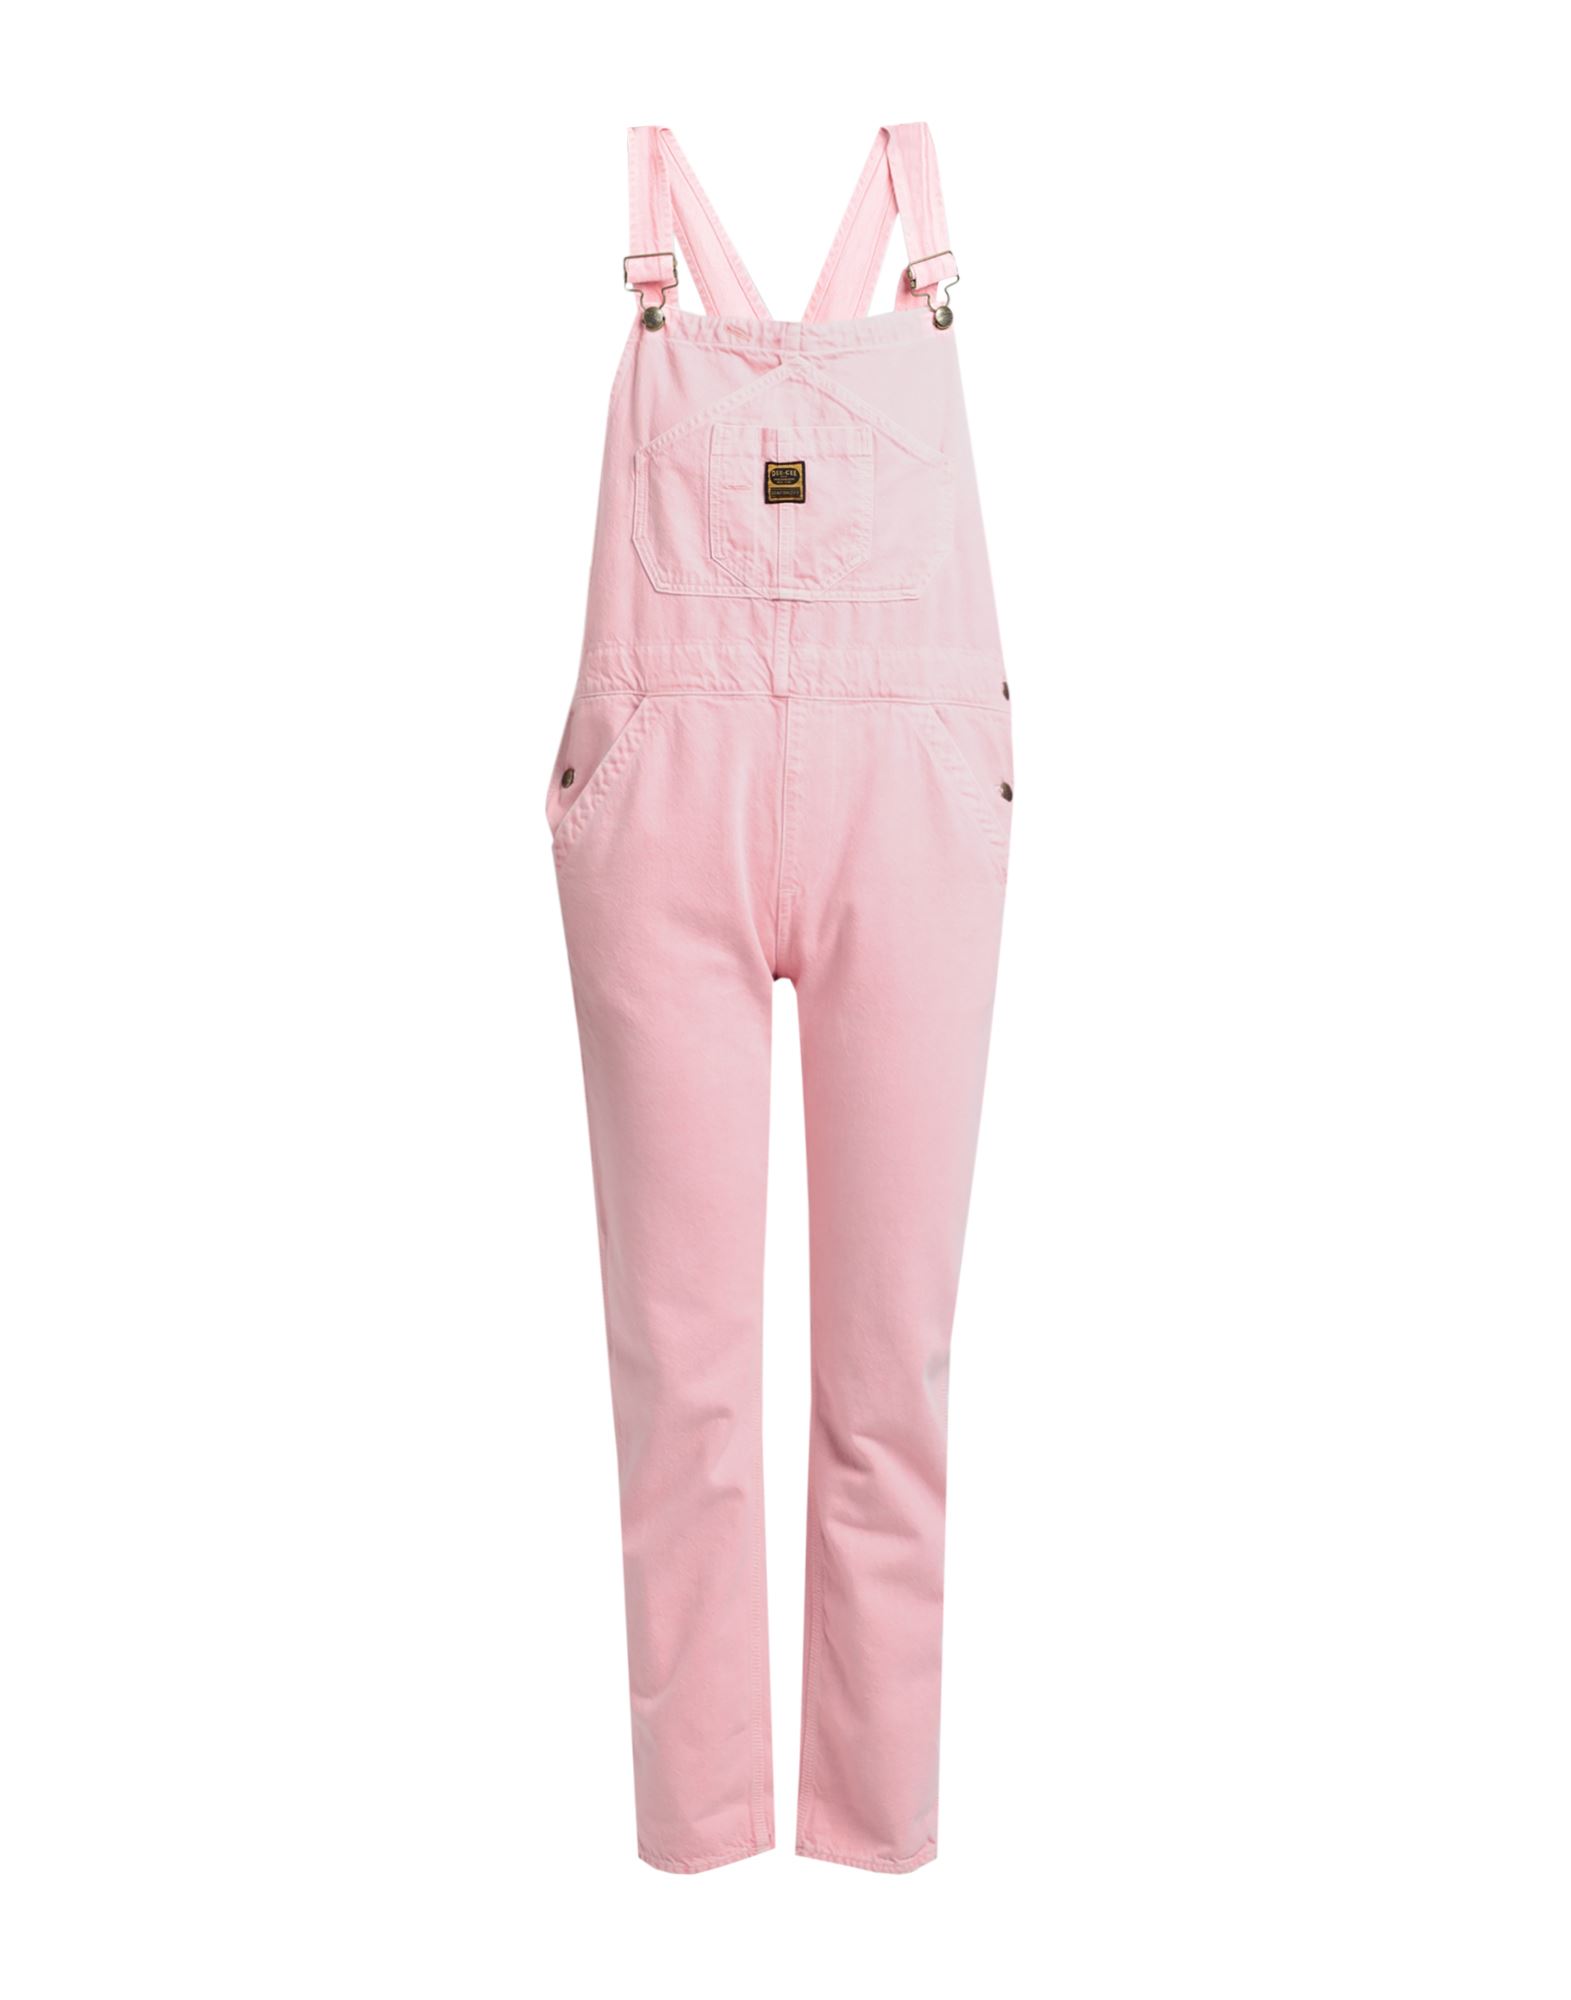 Shop Washington Dee Cee Washington Dee-cee Woman Overalls Pink Size 31 Organic Cotton